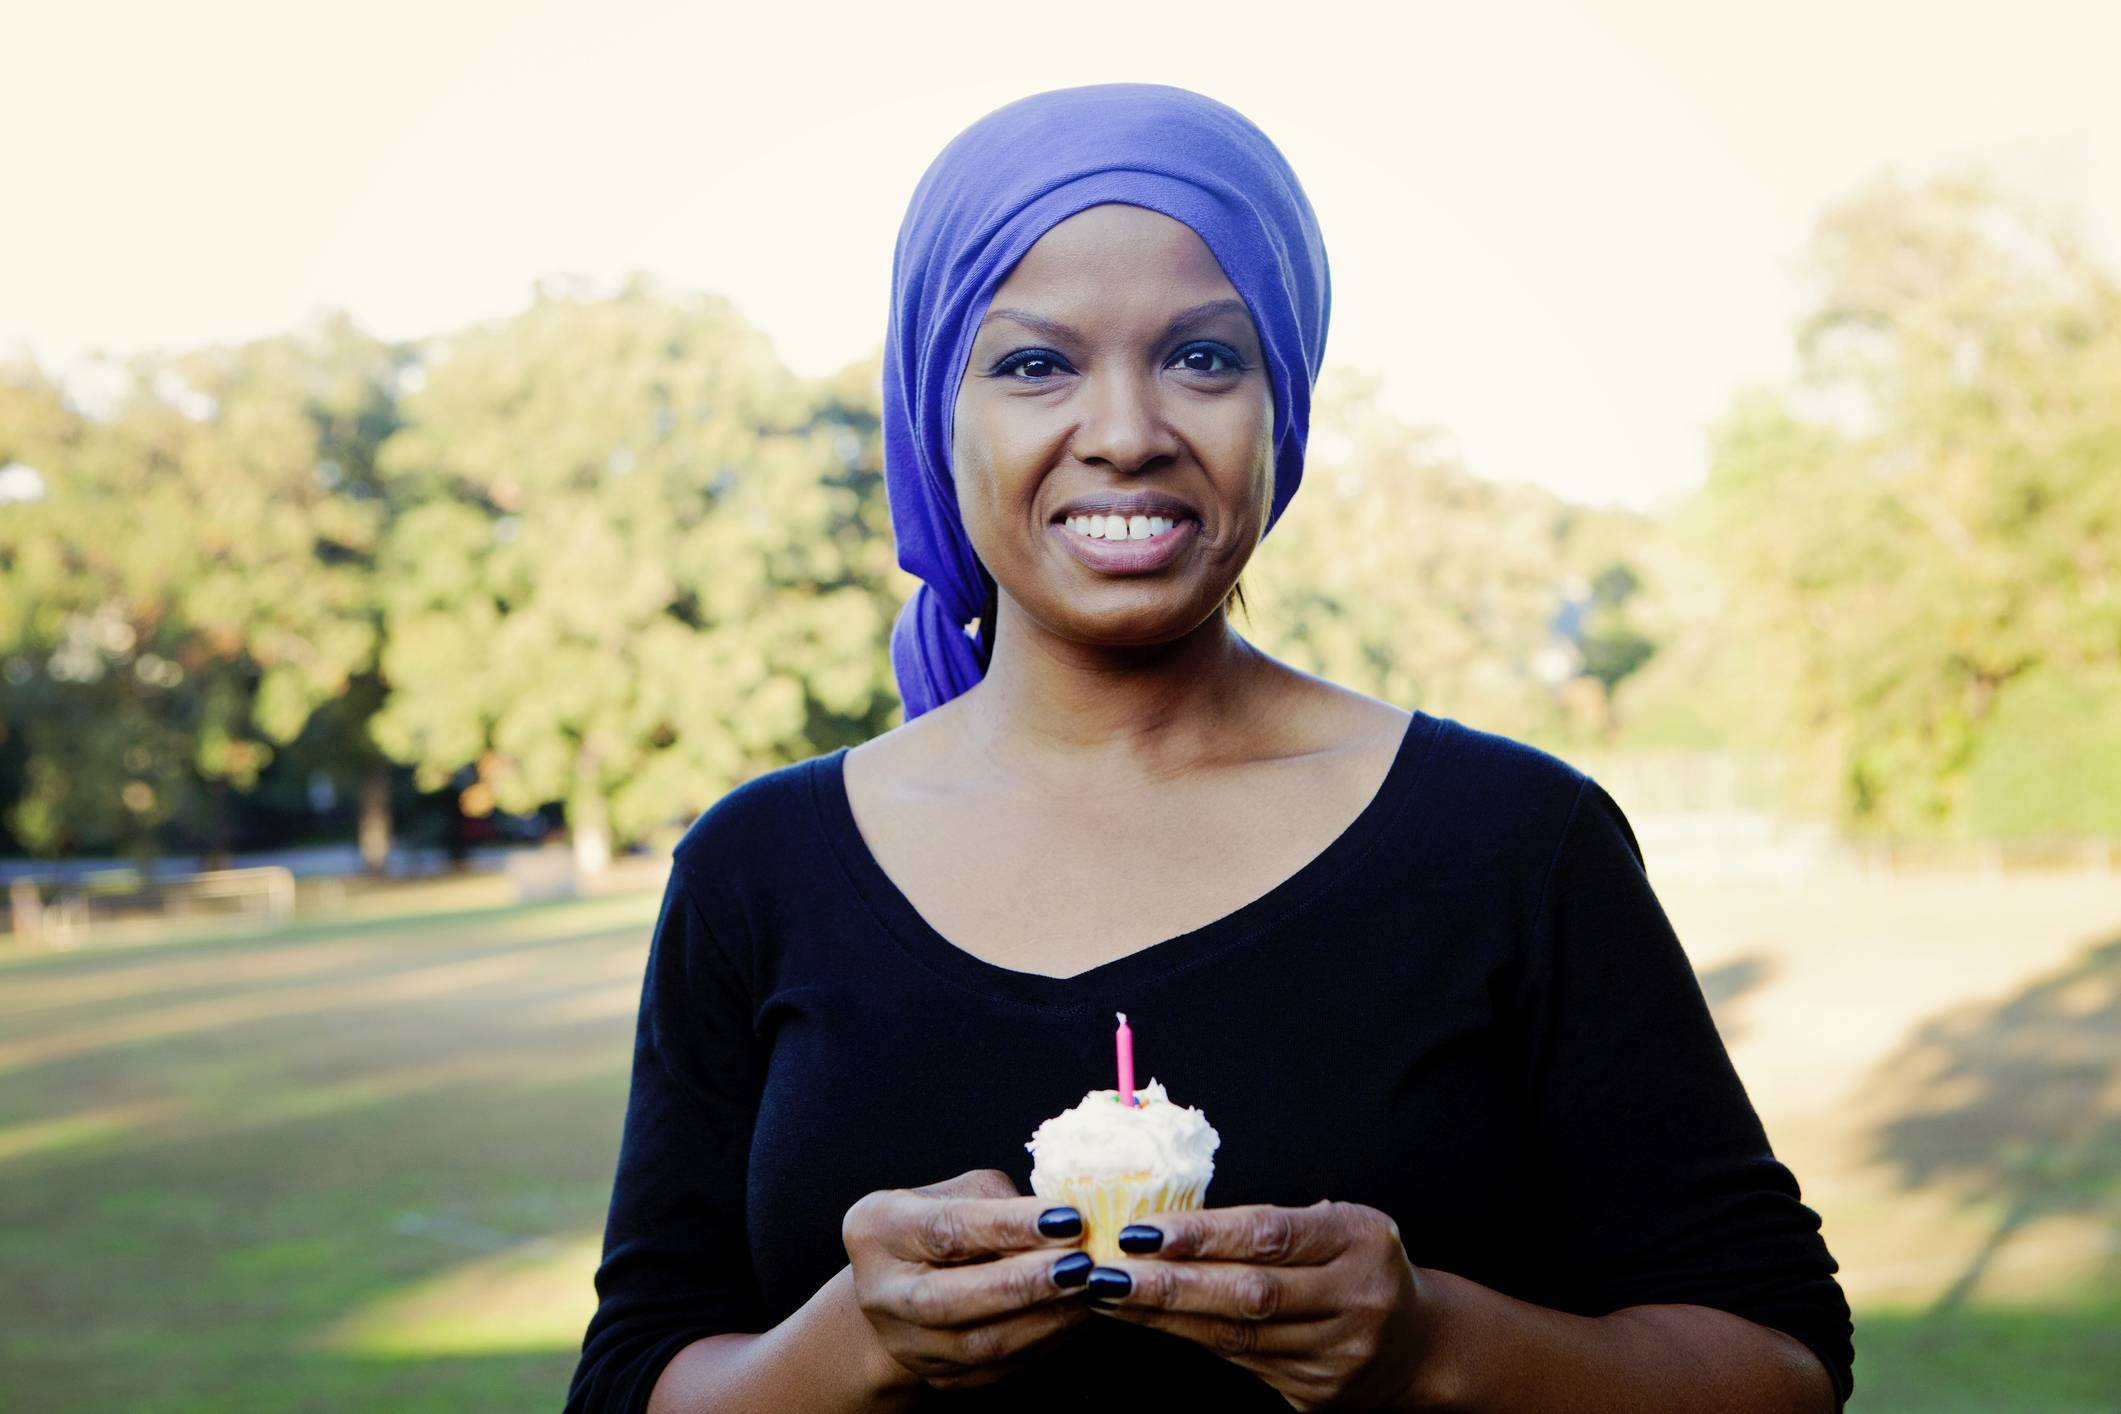 breast cancer survivor holding cupcake